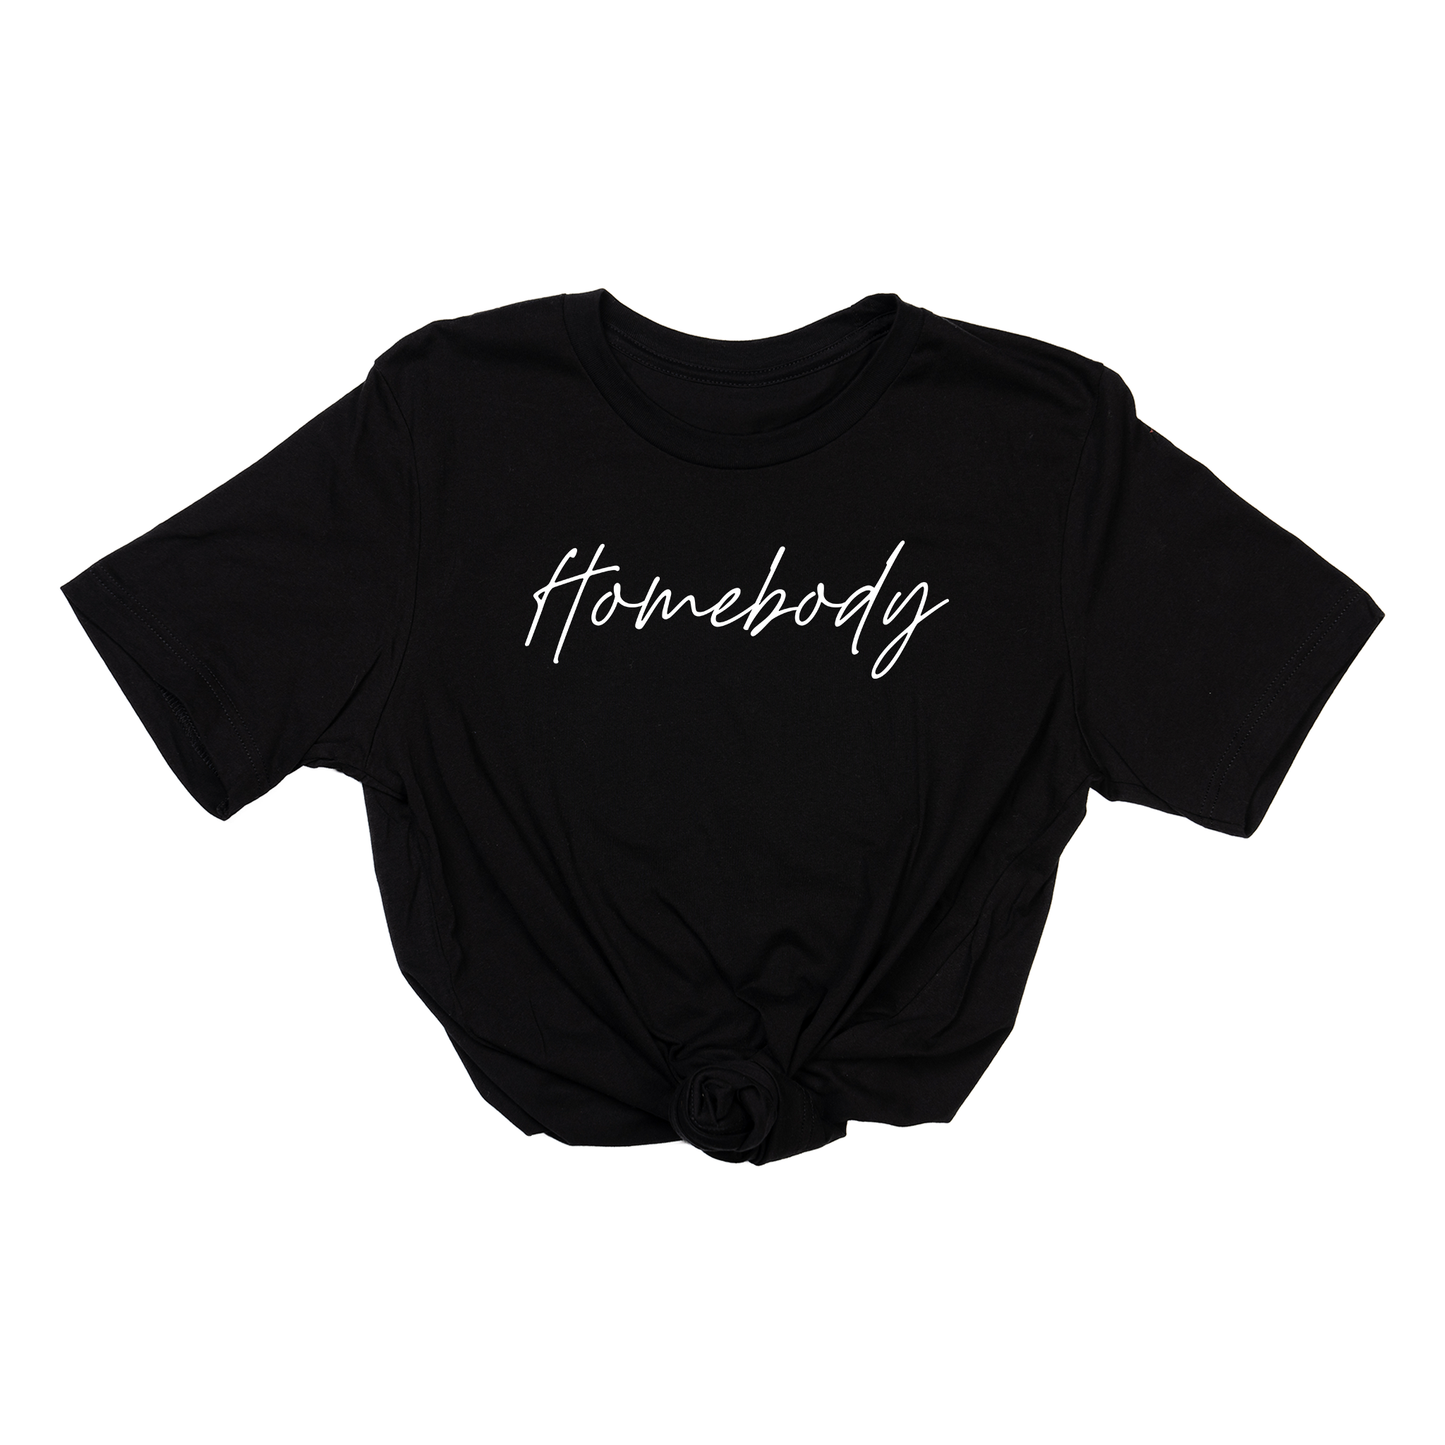 Homebody (White) - Tee (Black)